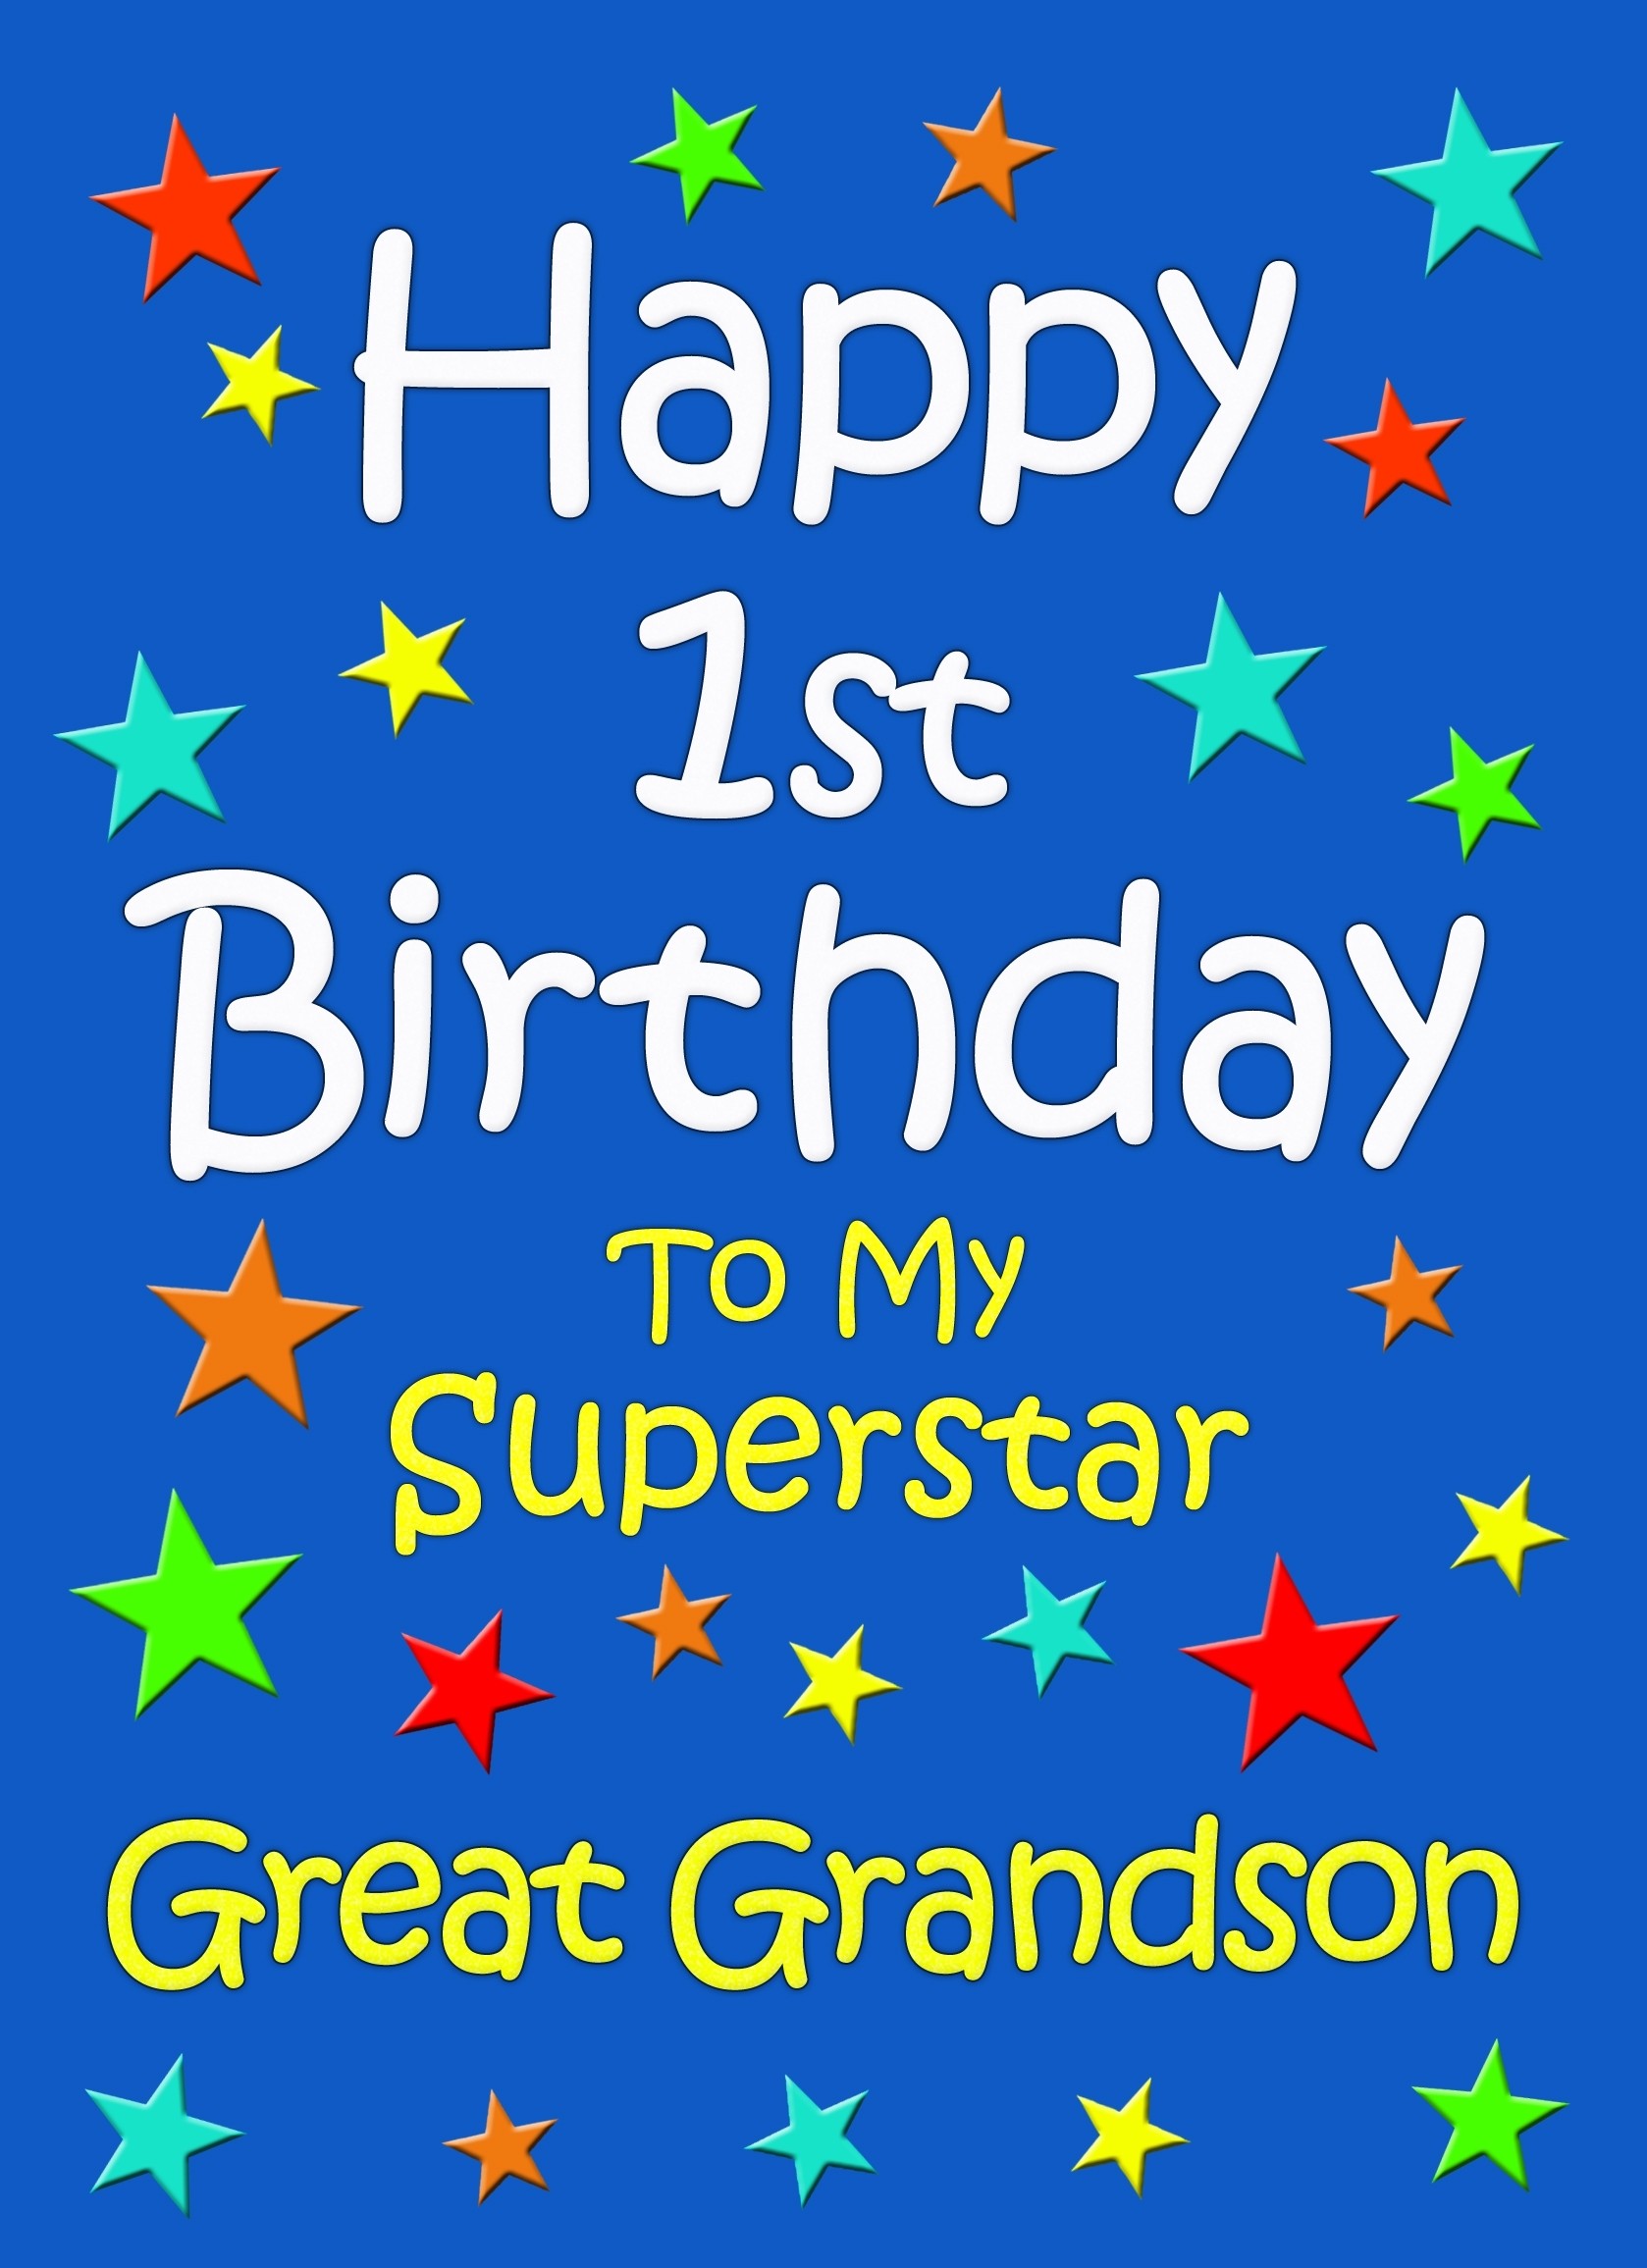 Great Grandson 1st Birthday Card (Blue)